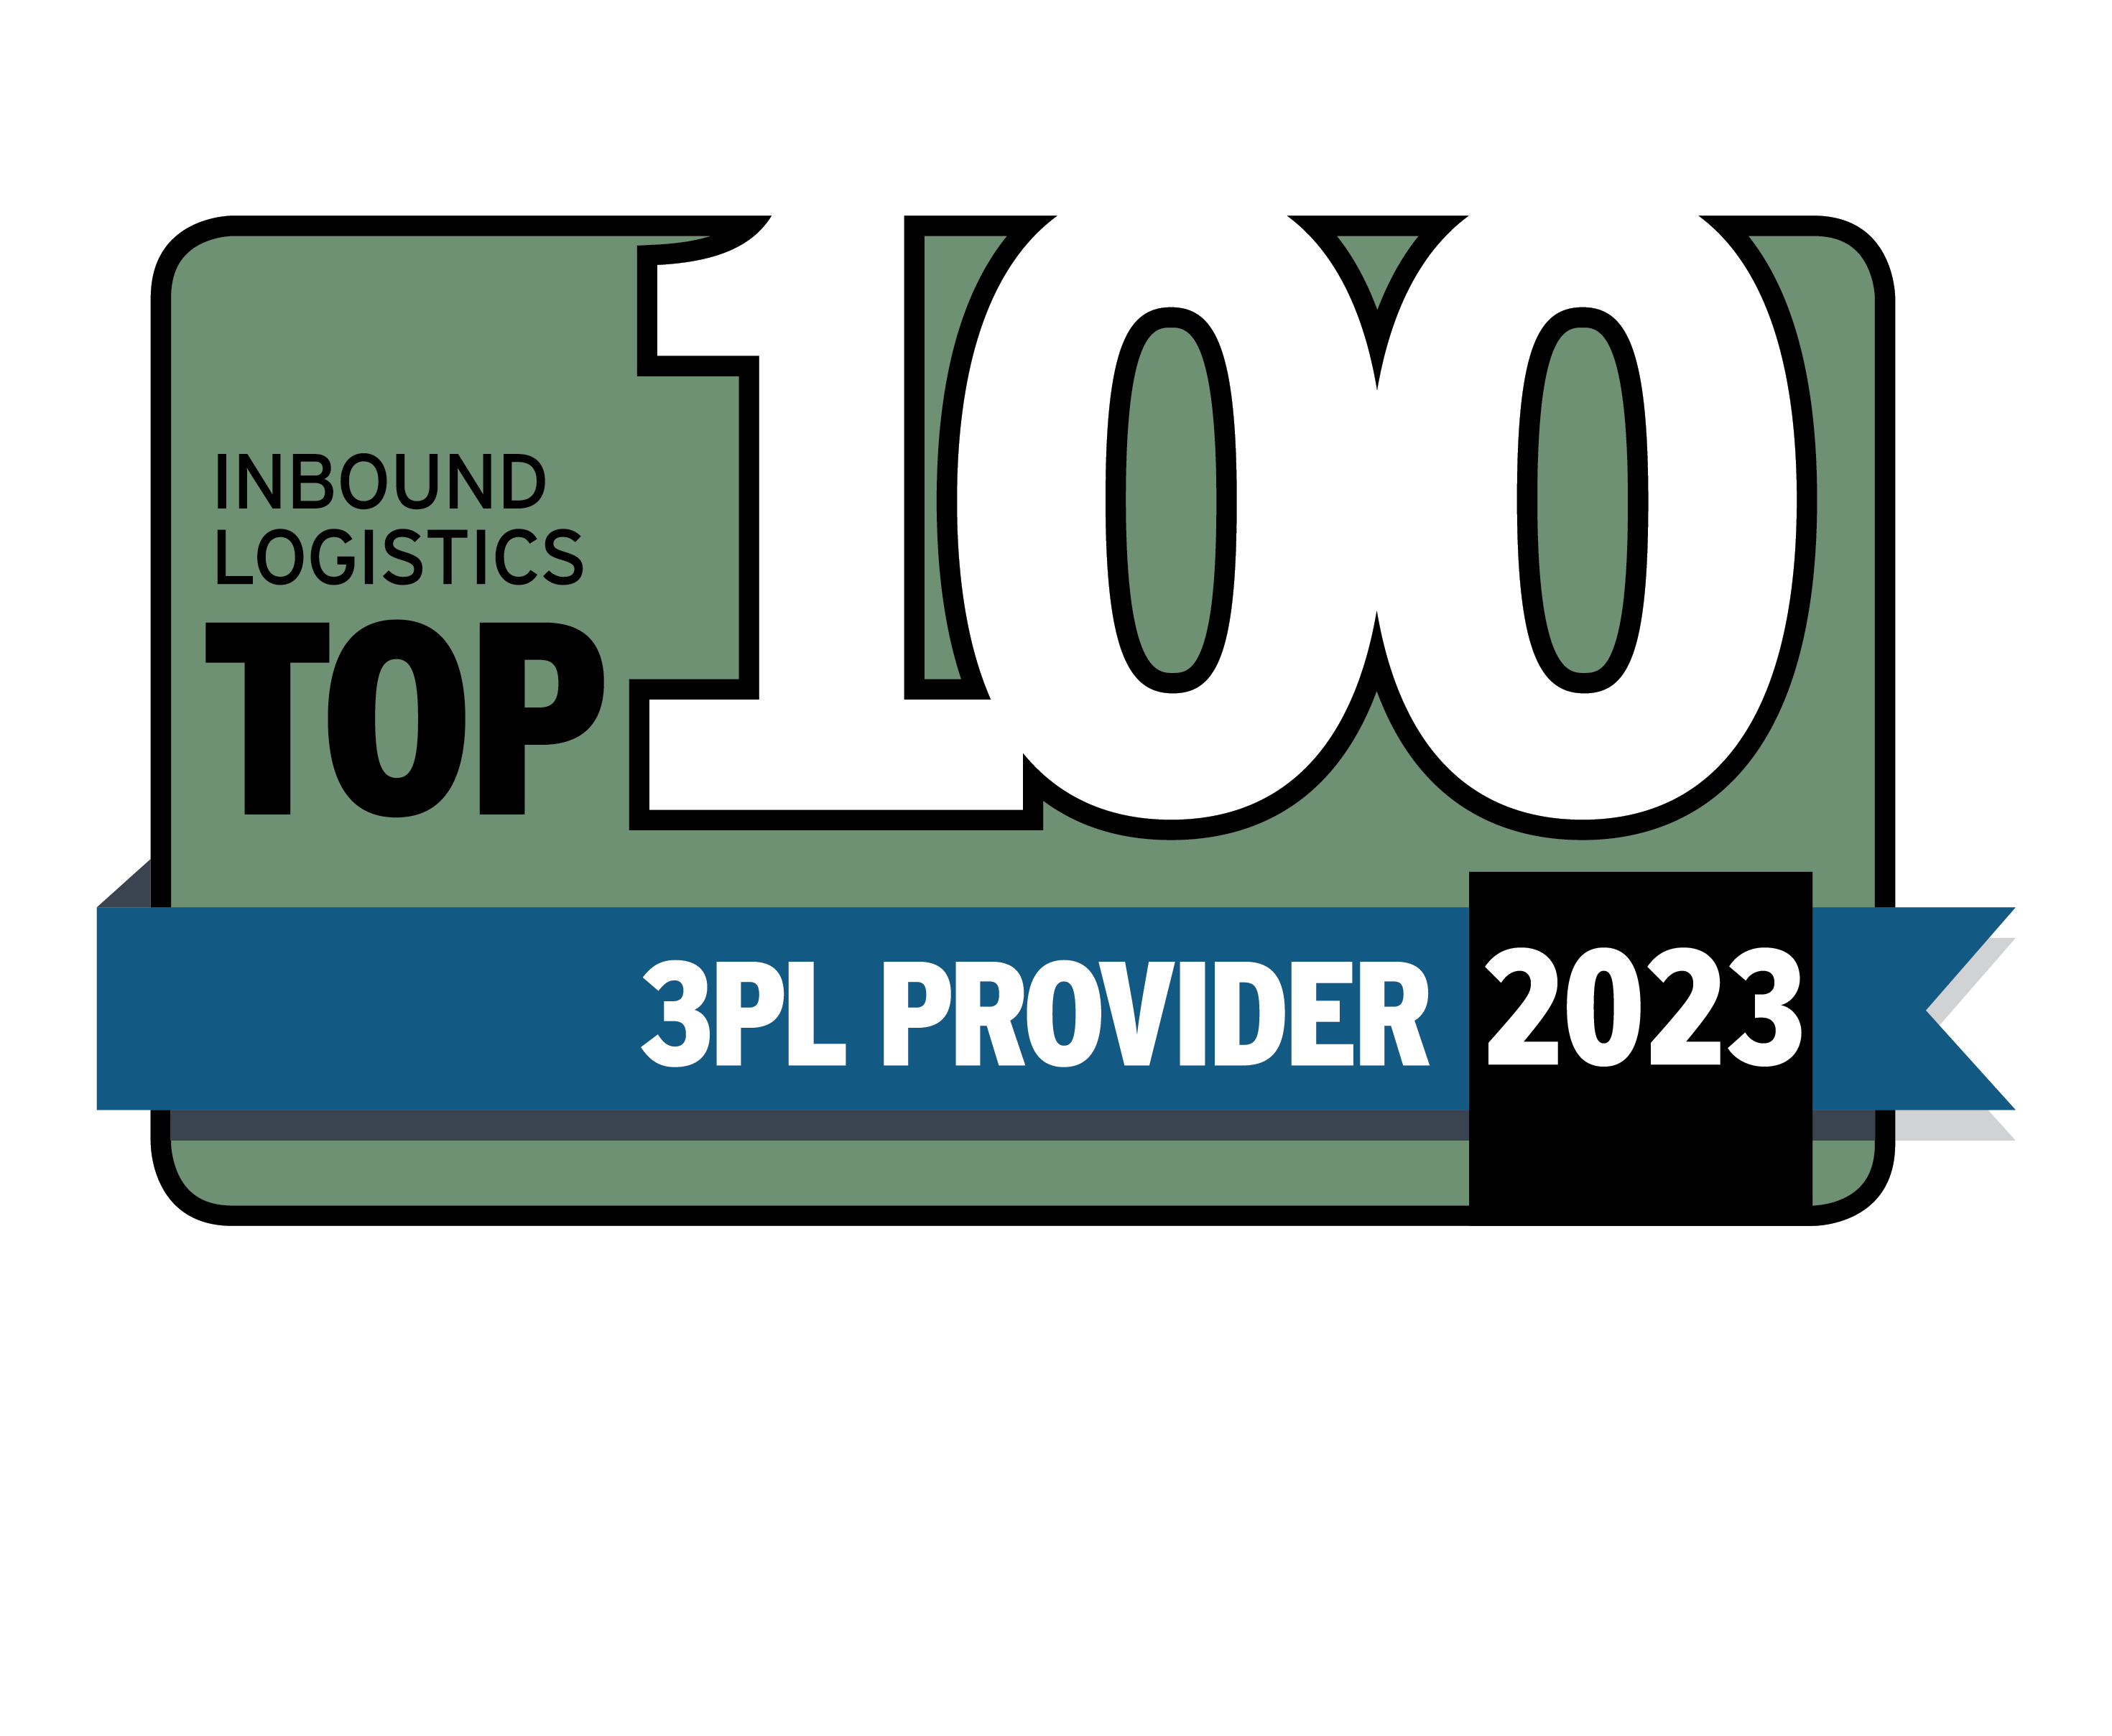 inbound logistics top 100 3pl provider 2023